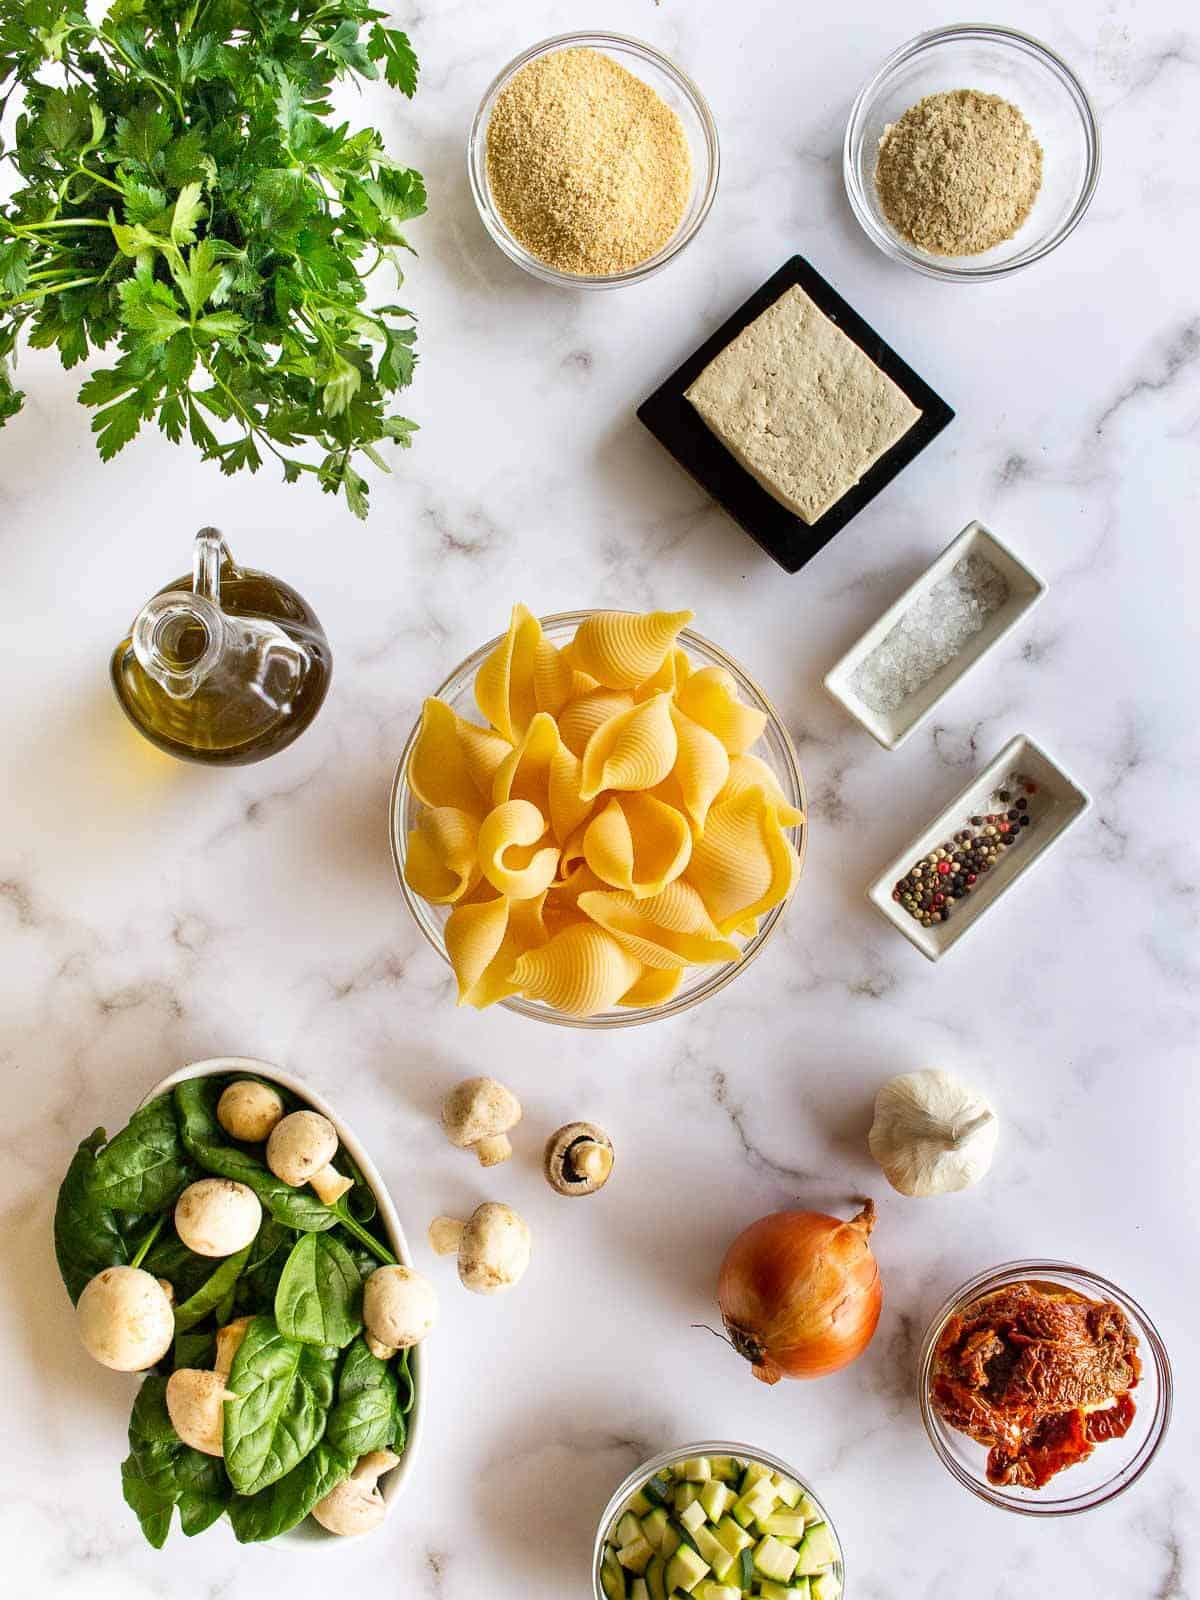 Best Vegan Stuffed Shells Pasta Ingredients